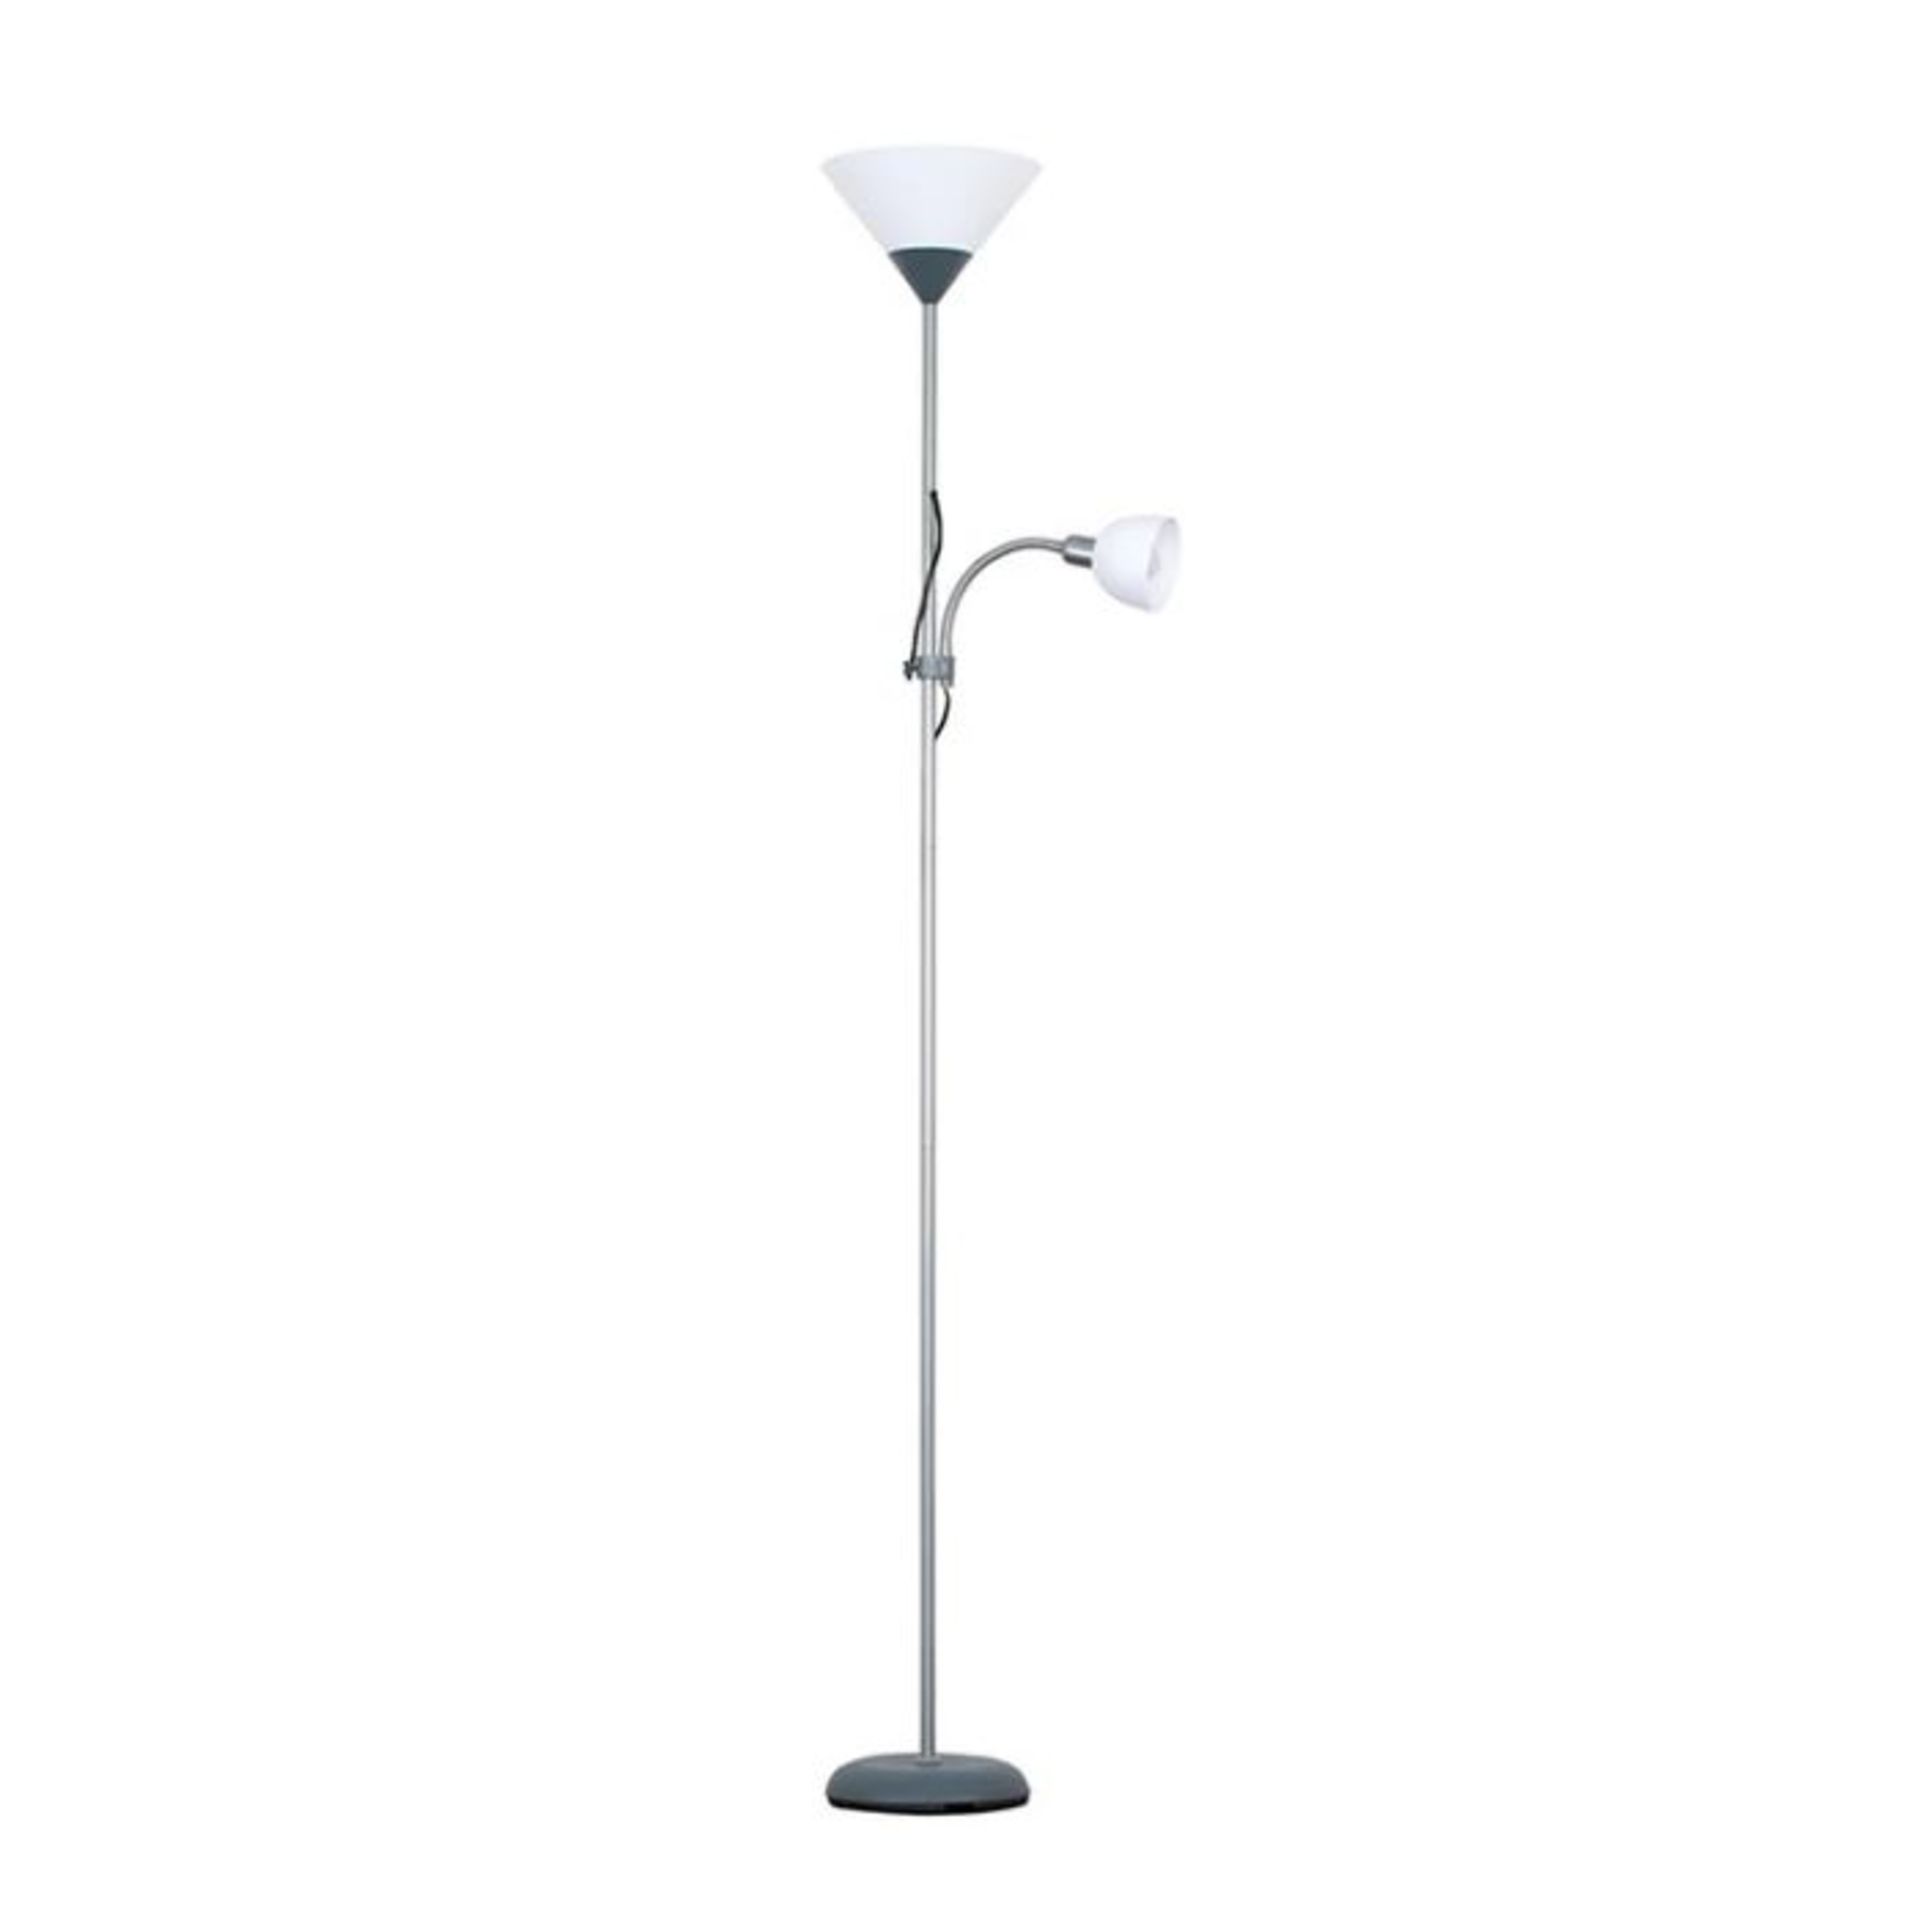 Marlow Home Co., Hatton 180cm Uplighter Floor Lamp (GREY FINISH) - RRP £27.99 (MSUN3474 - 29356/22)